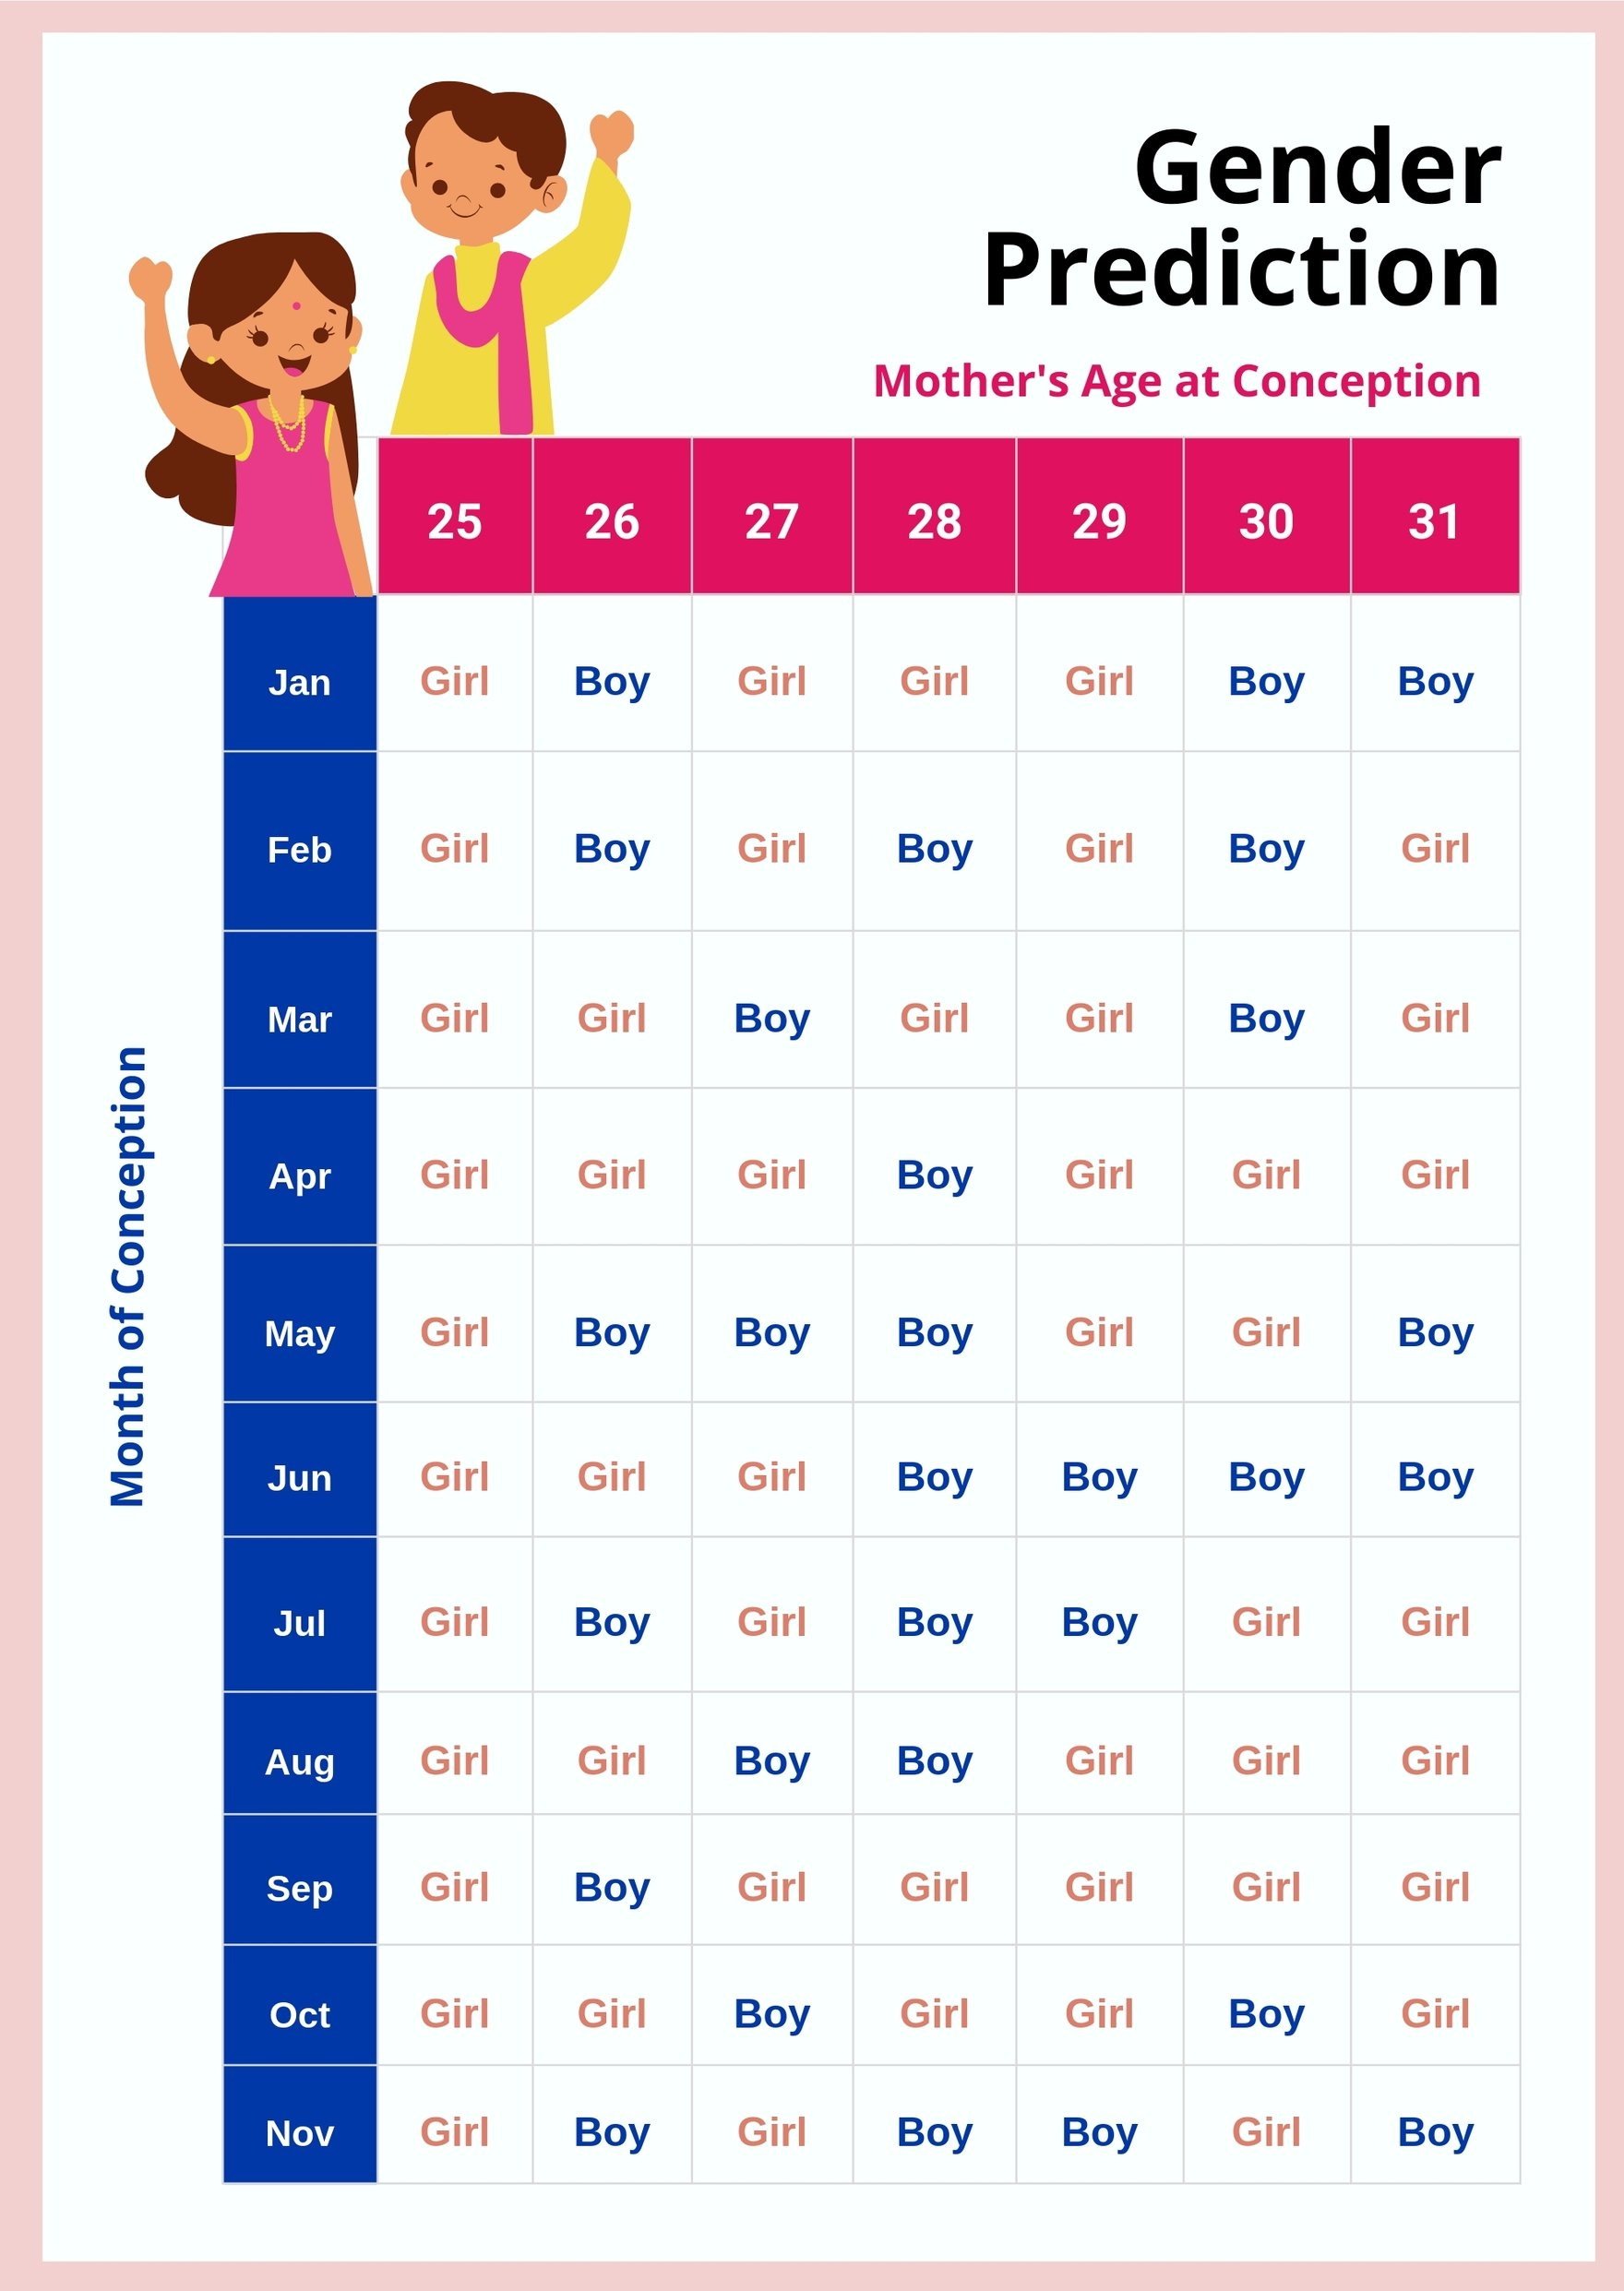 Gender Chart in PDF, Illustrator